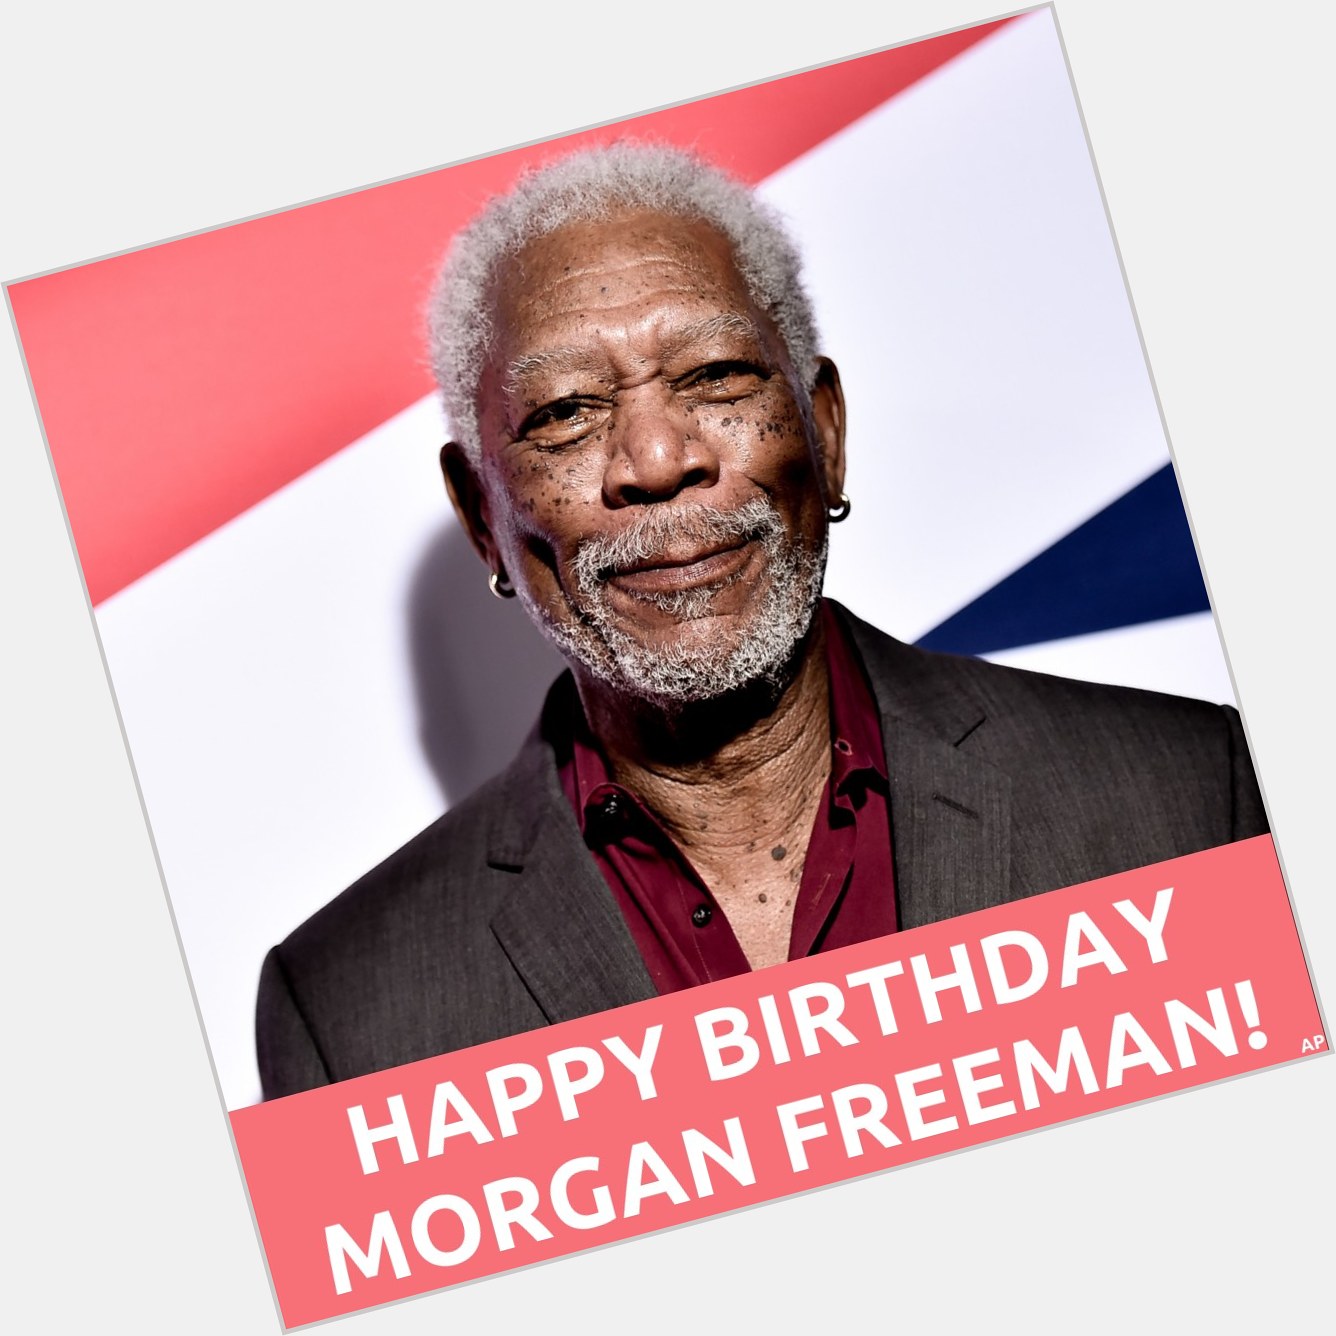 HAPPY BIRTHDAY! Morgan Freeman turns 83 today. 